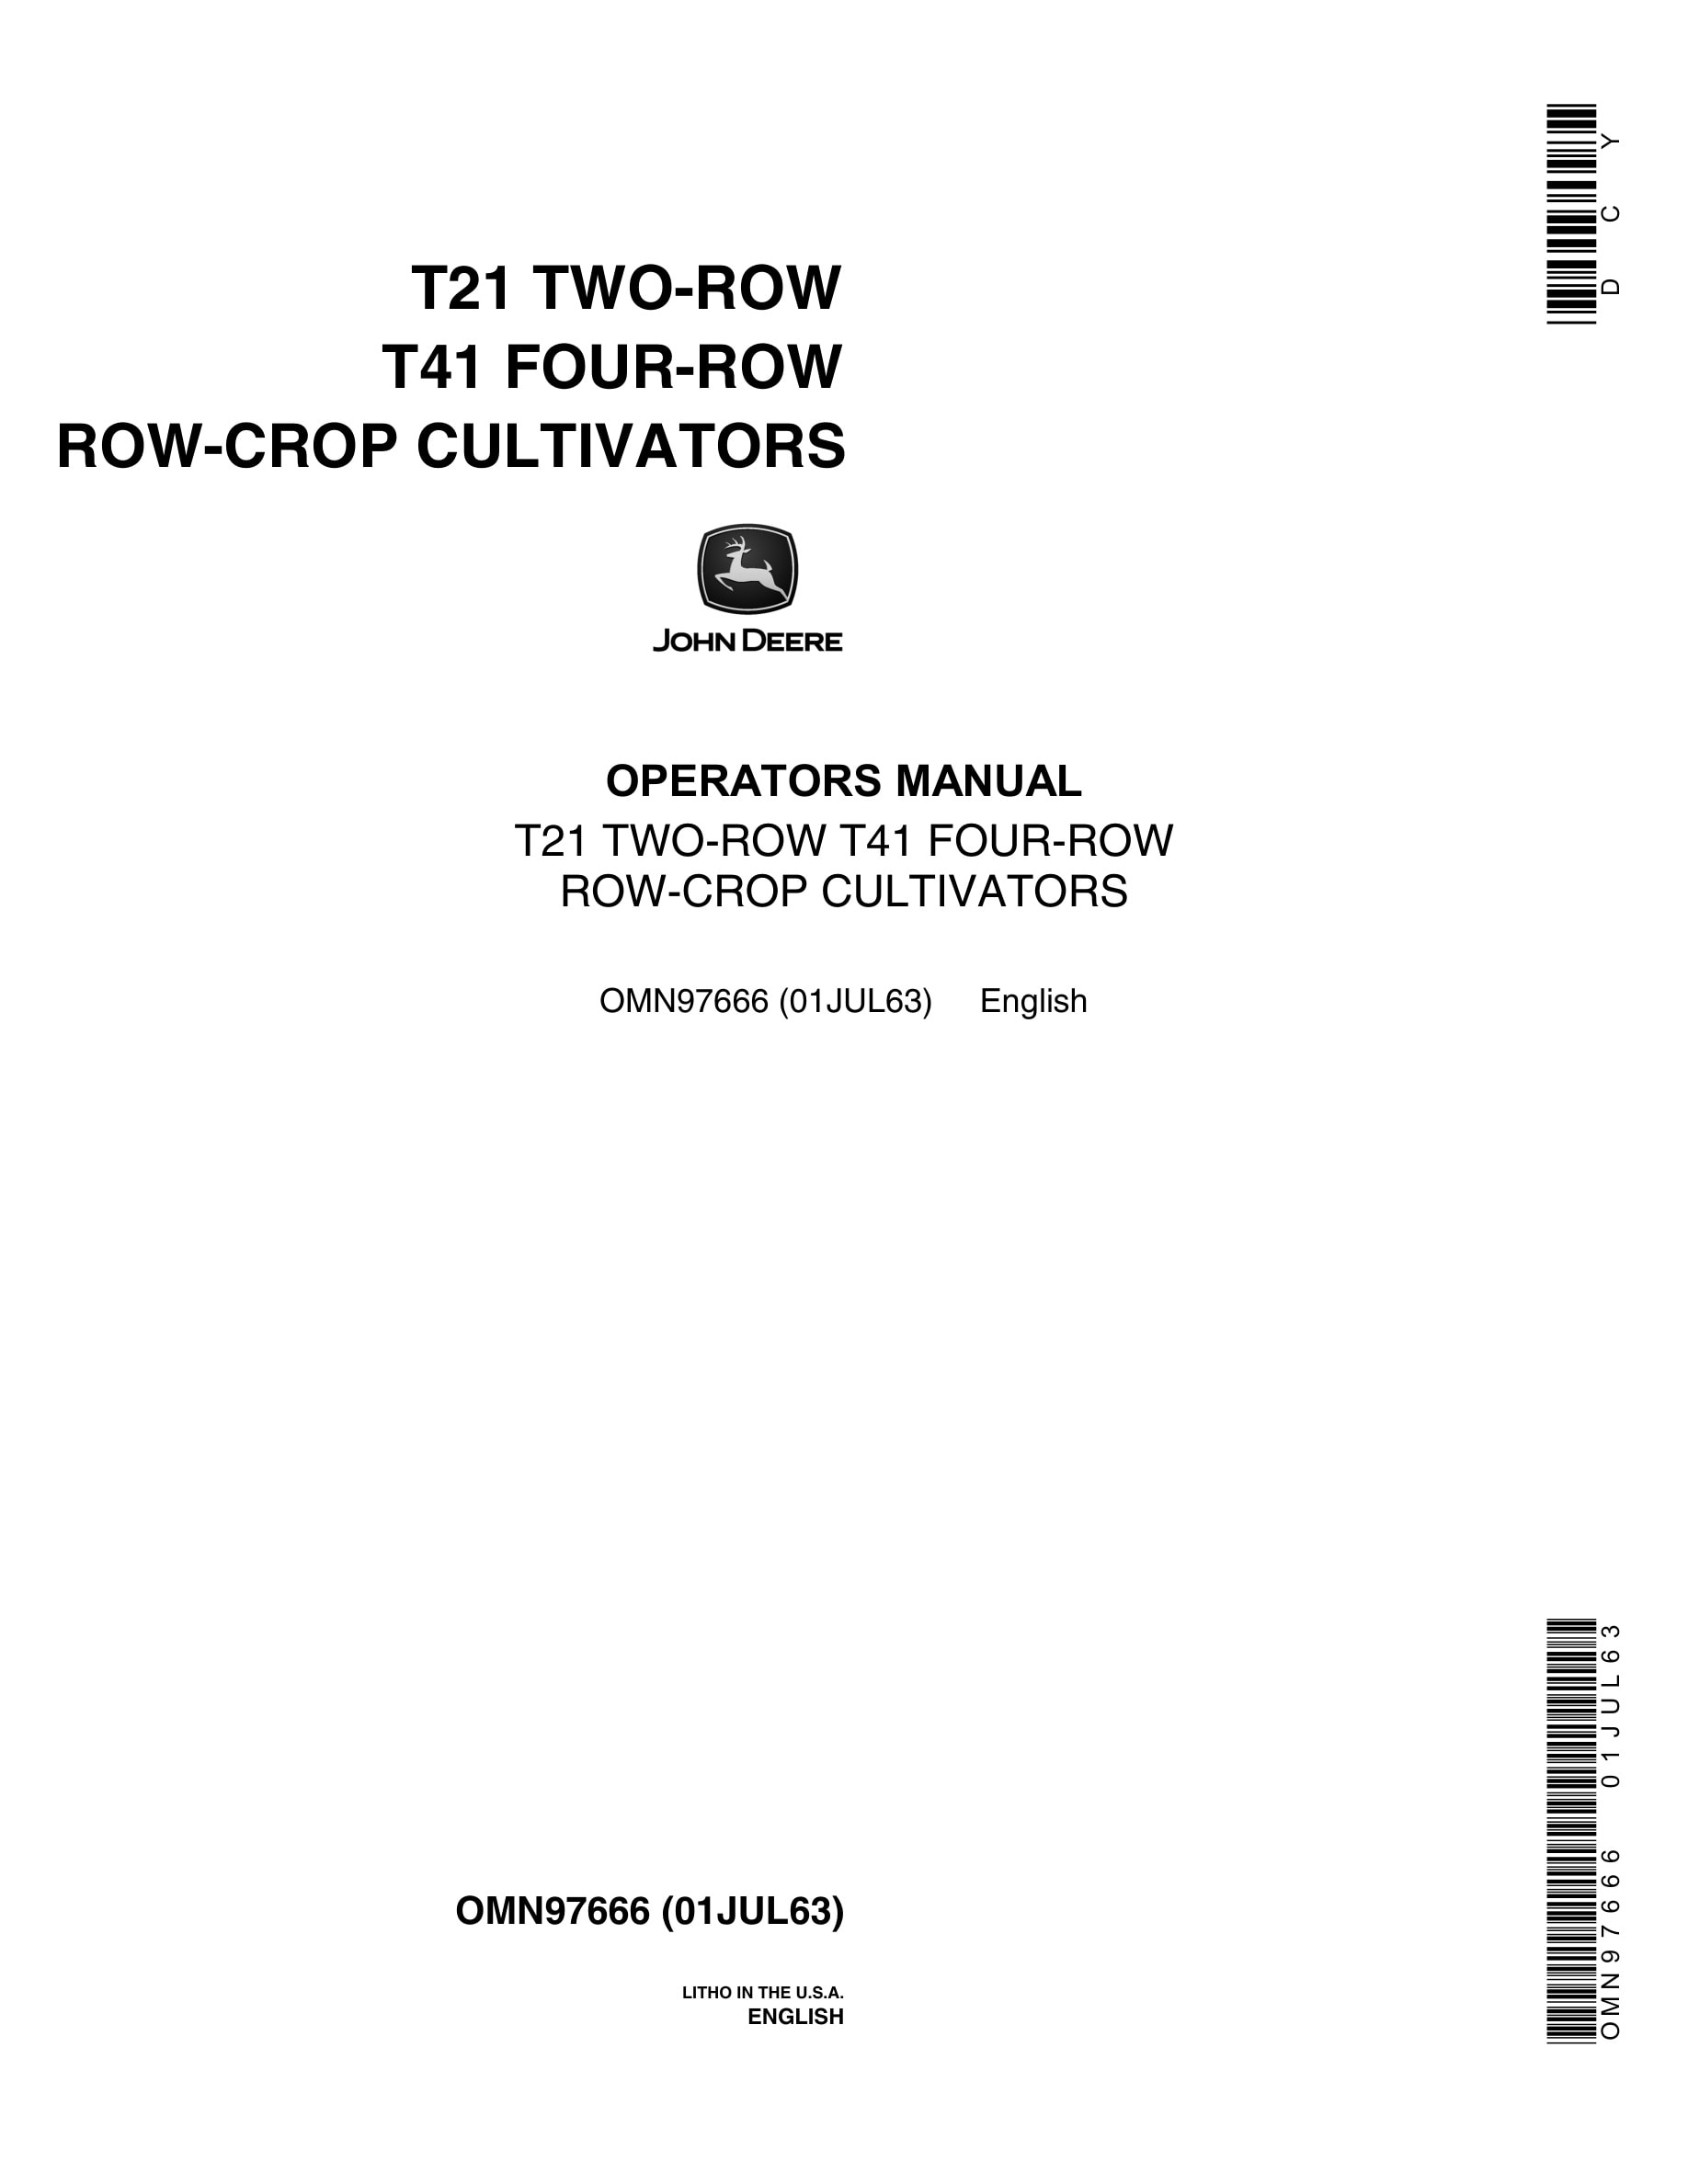 John Deere T21 TWO-ROW T41 FOUR-ROW ROW-CROP CULTIVATOR Operator Manual OMN97666-1